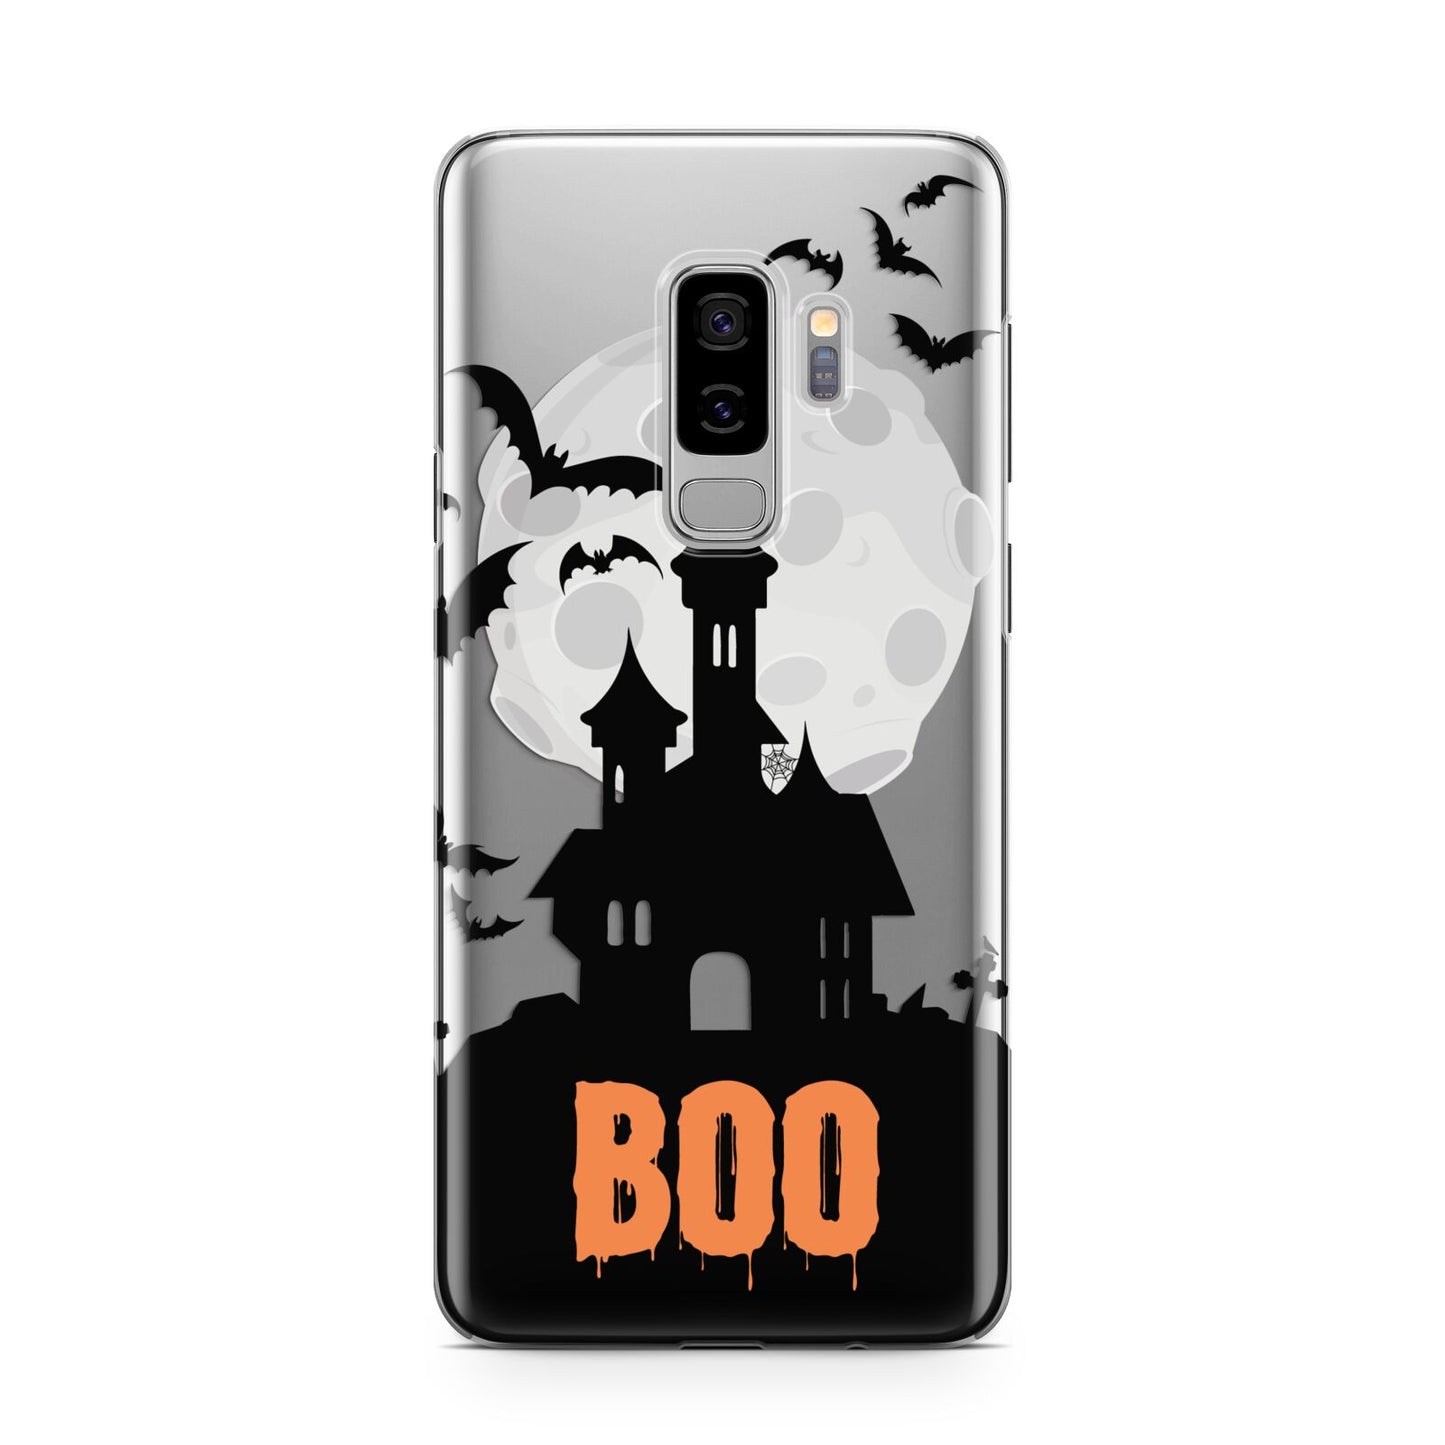 Boo Gothic Black Halloween Samsung Galaxy S9 Plus Case on Silver phone